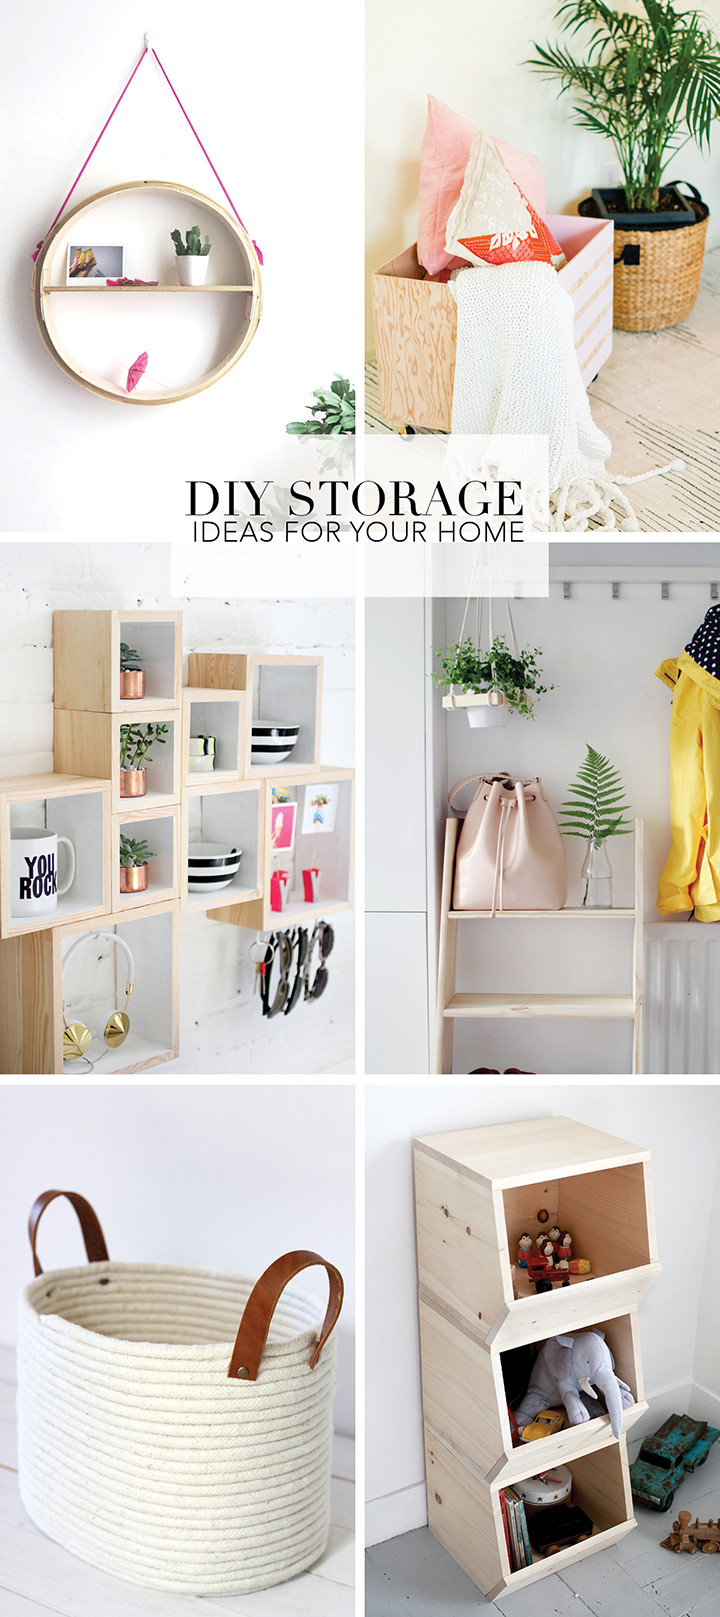 DIY Organizer Ideas
 Alice and LoisFavorite DIY Home Storage Ideas